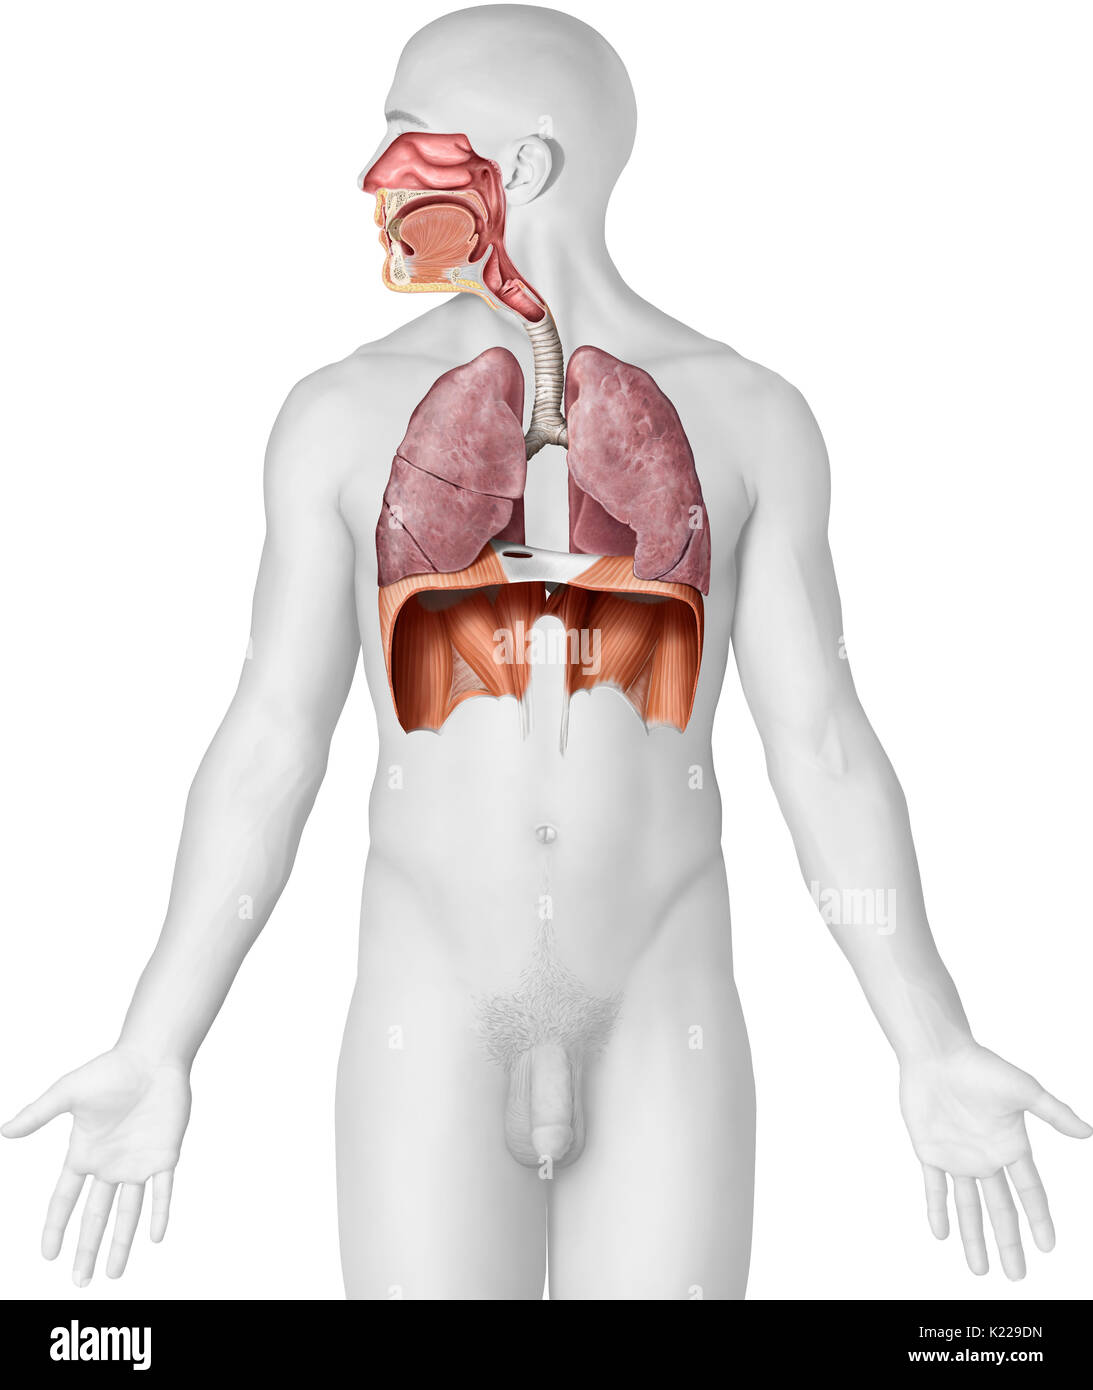 File:Anatomie obere Atemwege und Kehle.jpg - Wikimedia Commons